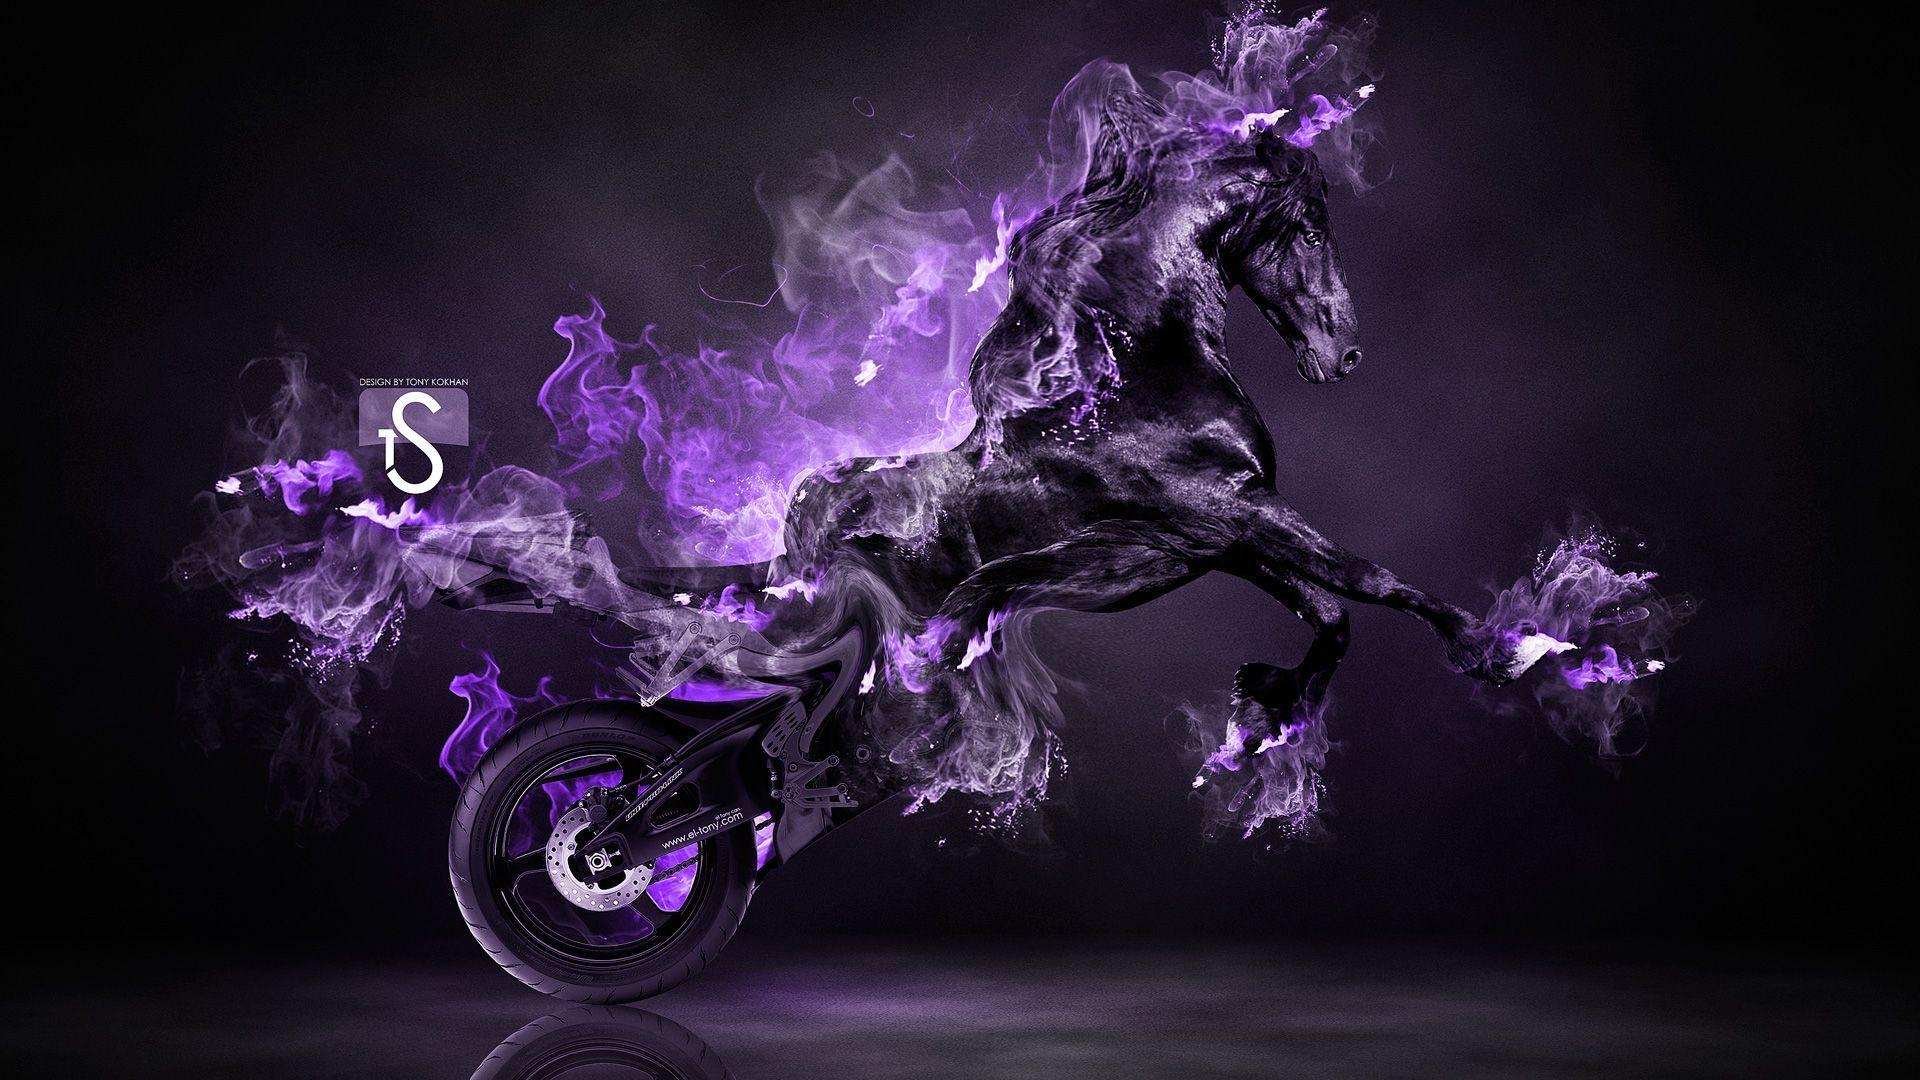 Neon Purple Flames.. power fire 2014 ducati diavel tiger fire